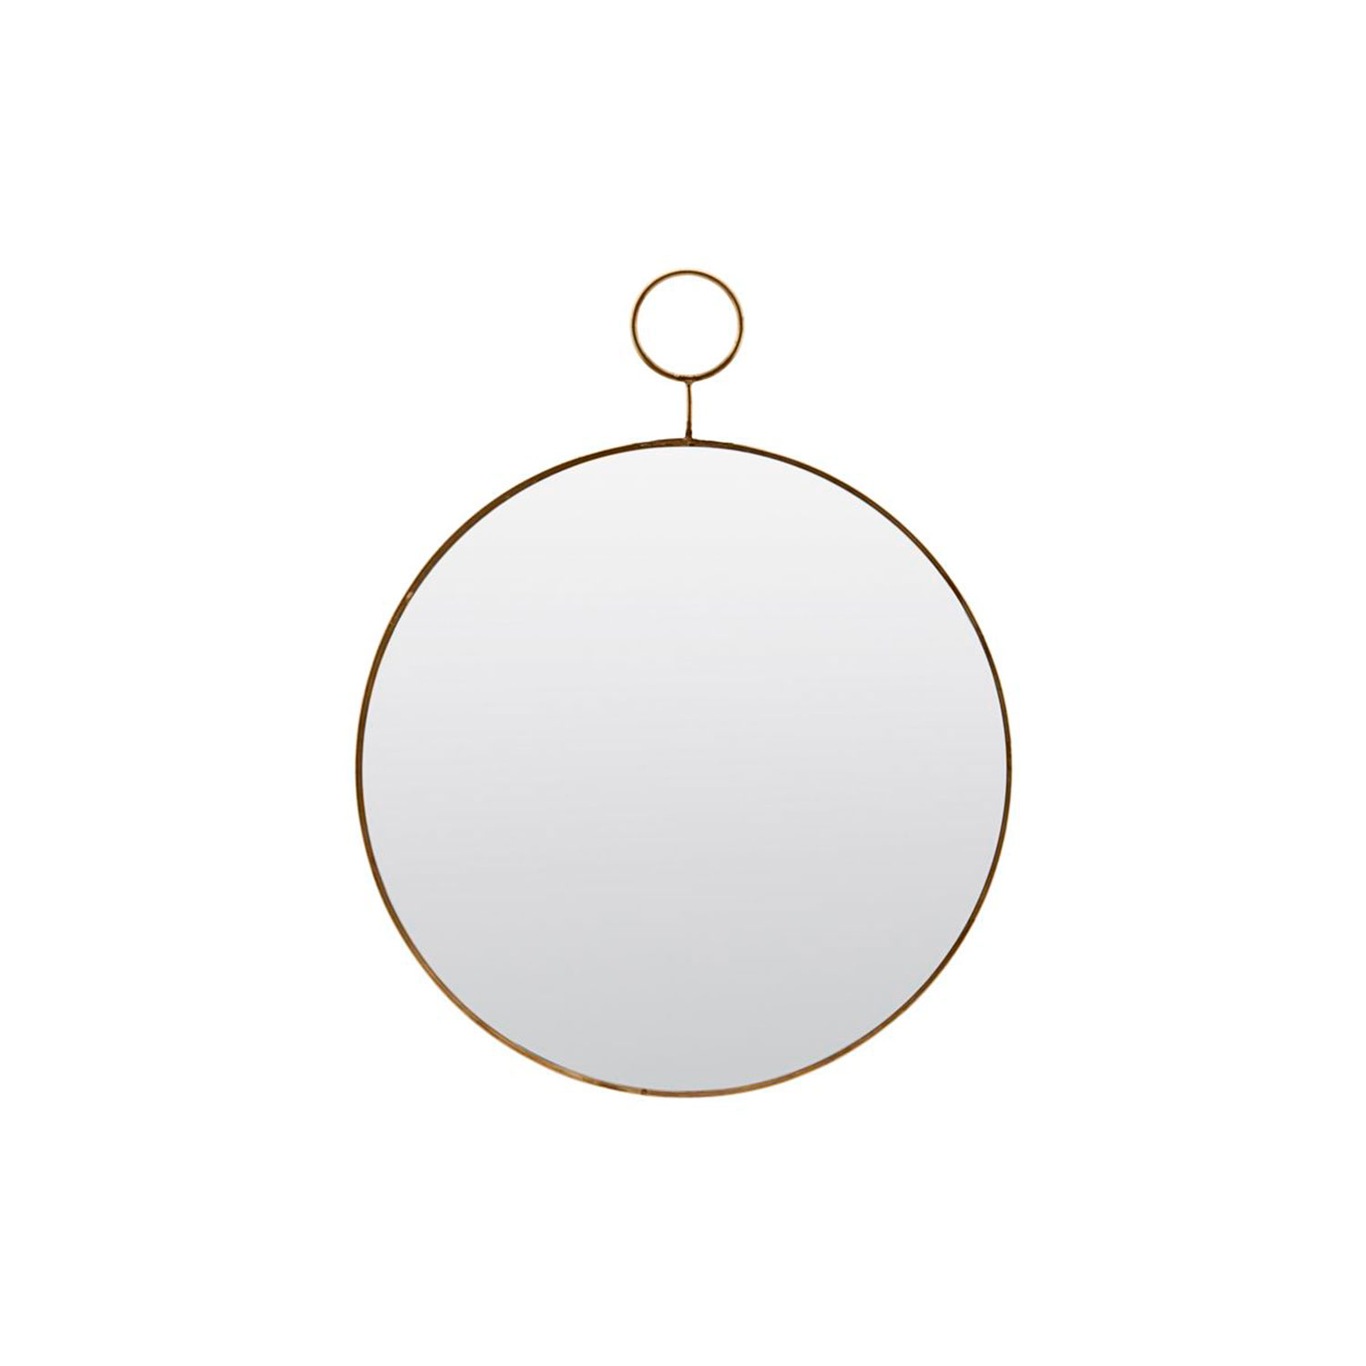 The Loop Mirror Ø32cm, Brass